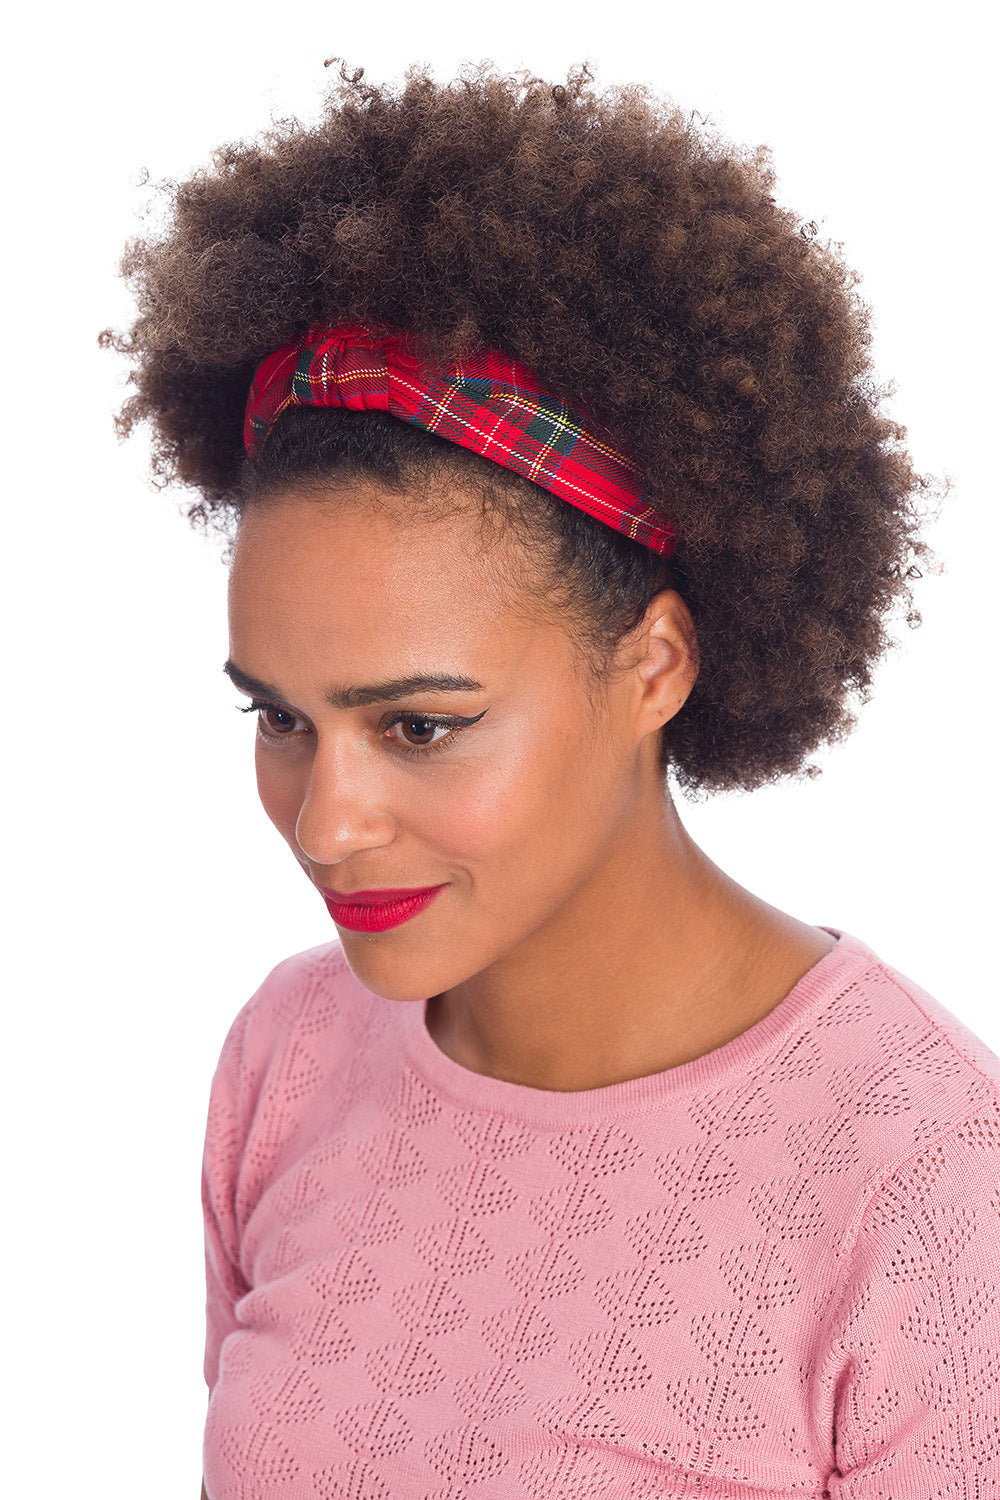 Model wearing red tartan headband